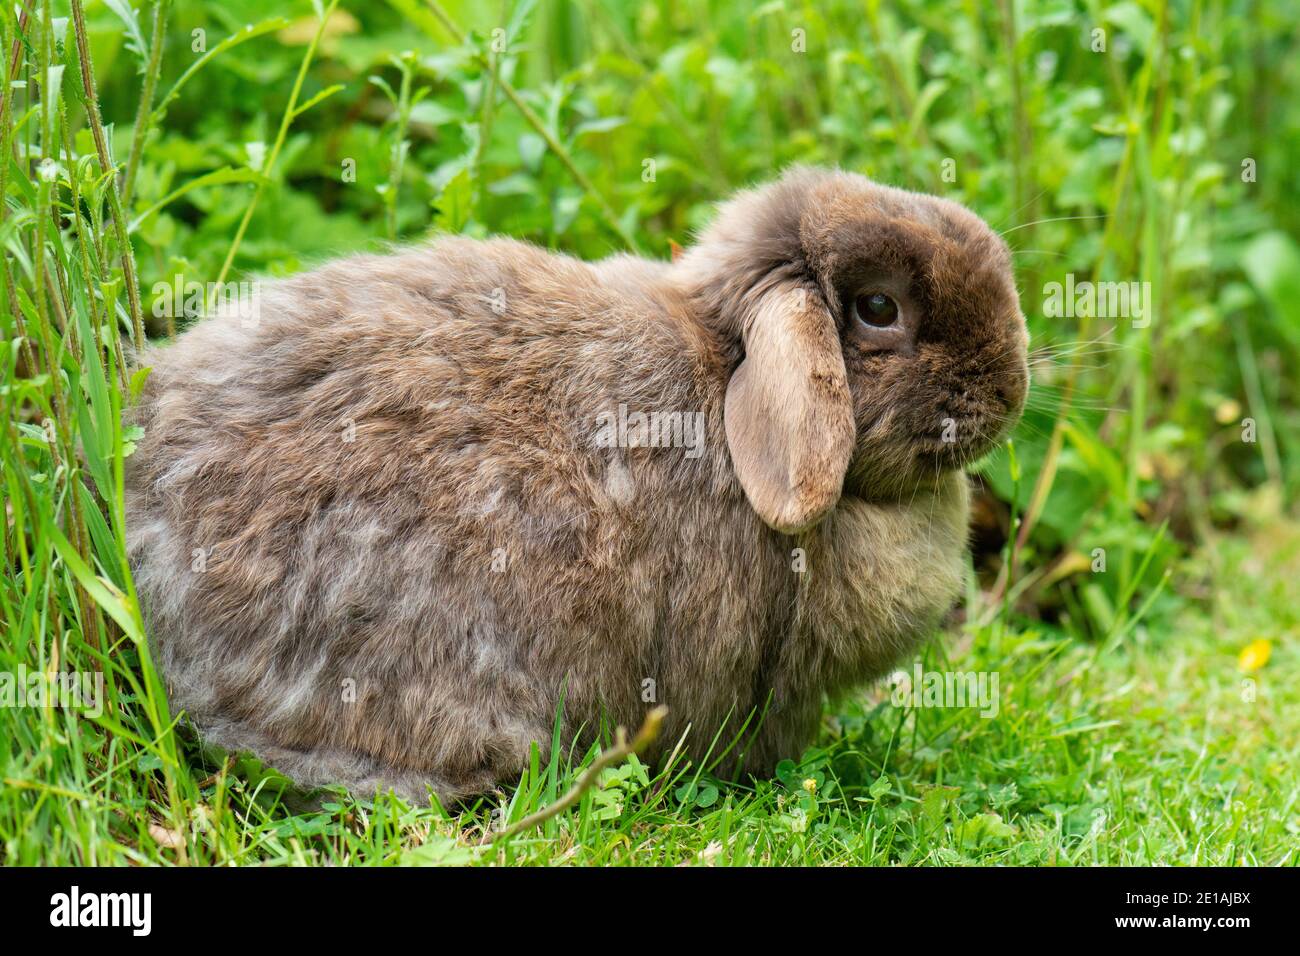 Miniature Lop rabbit moulting or shedding fur Stock Photo